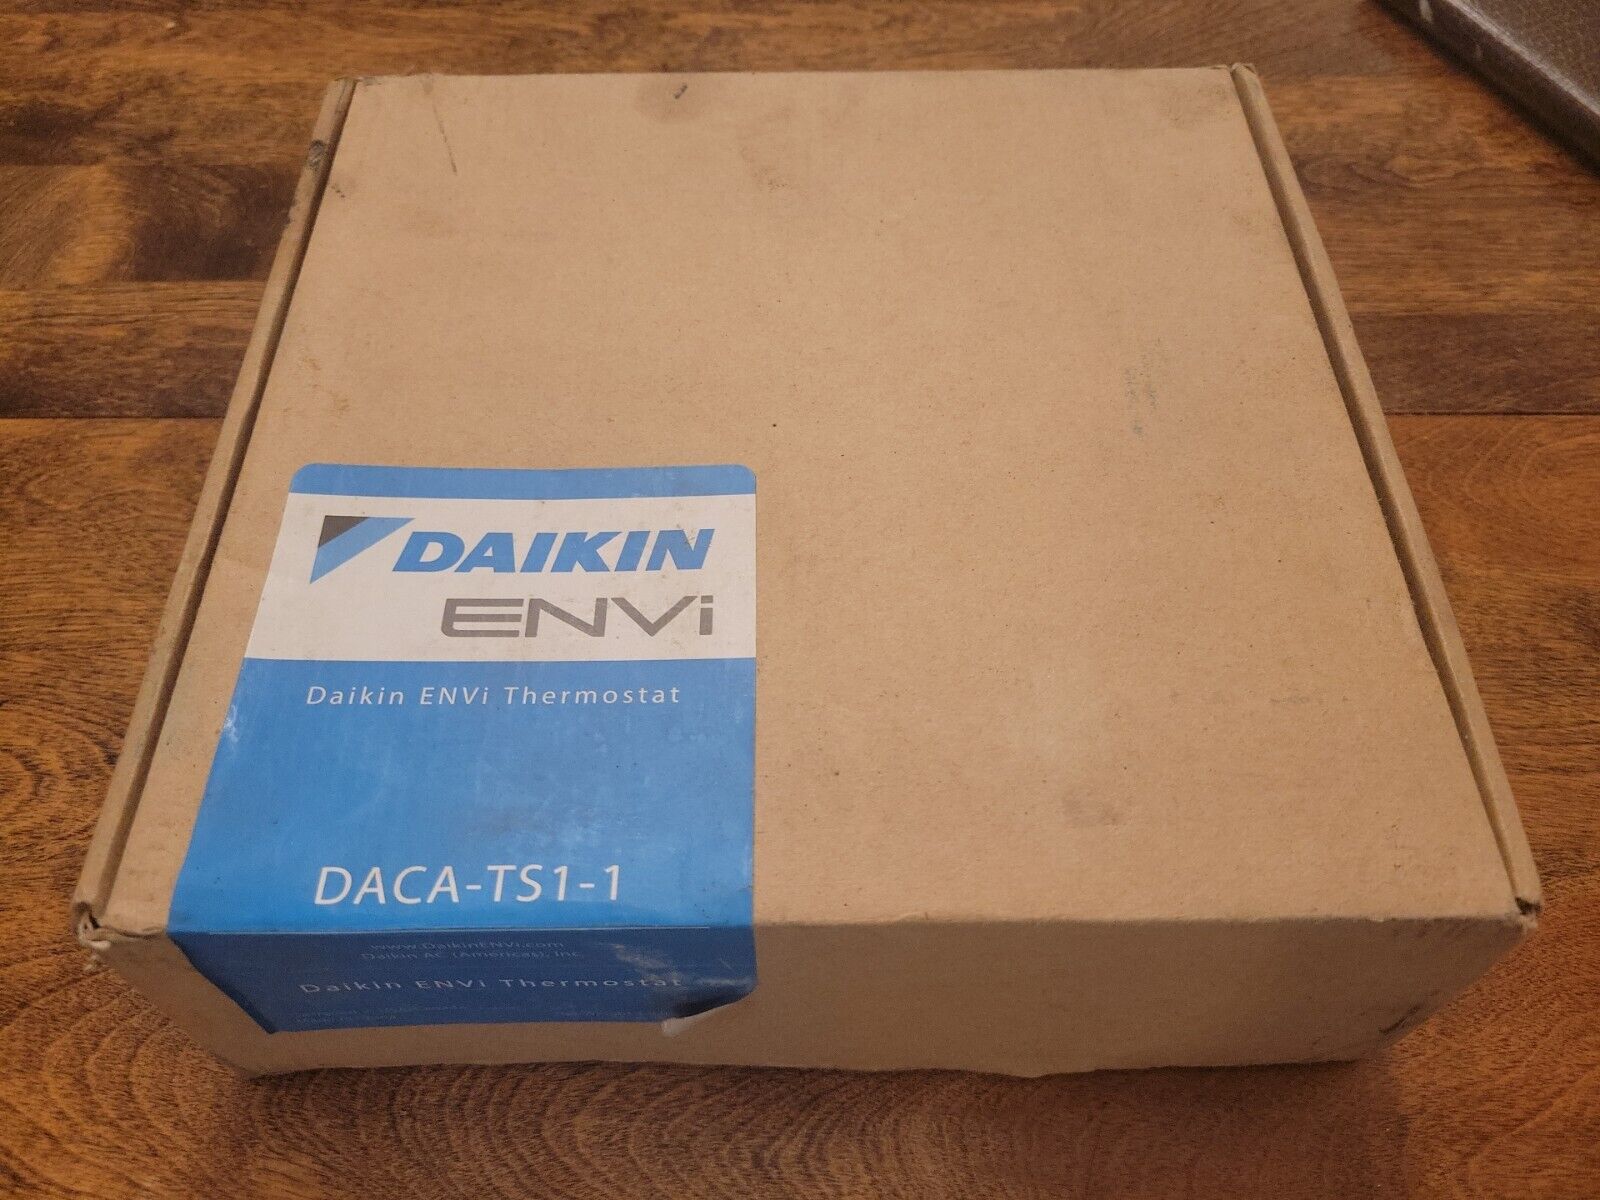 Daikin ENVi DACA-TS1-1 Intelligent Programmable Thermostat Kit Open Box 